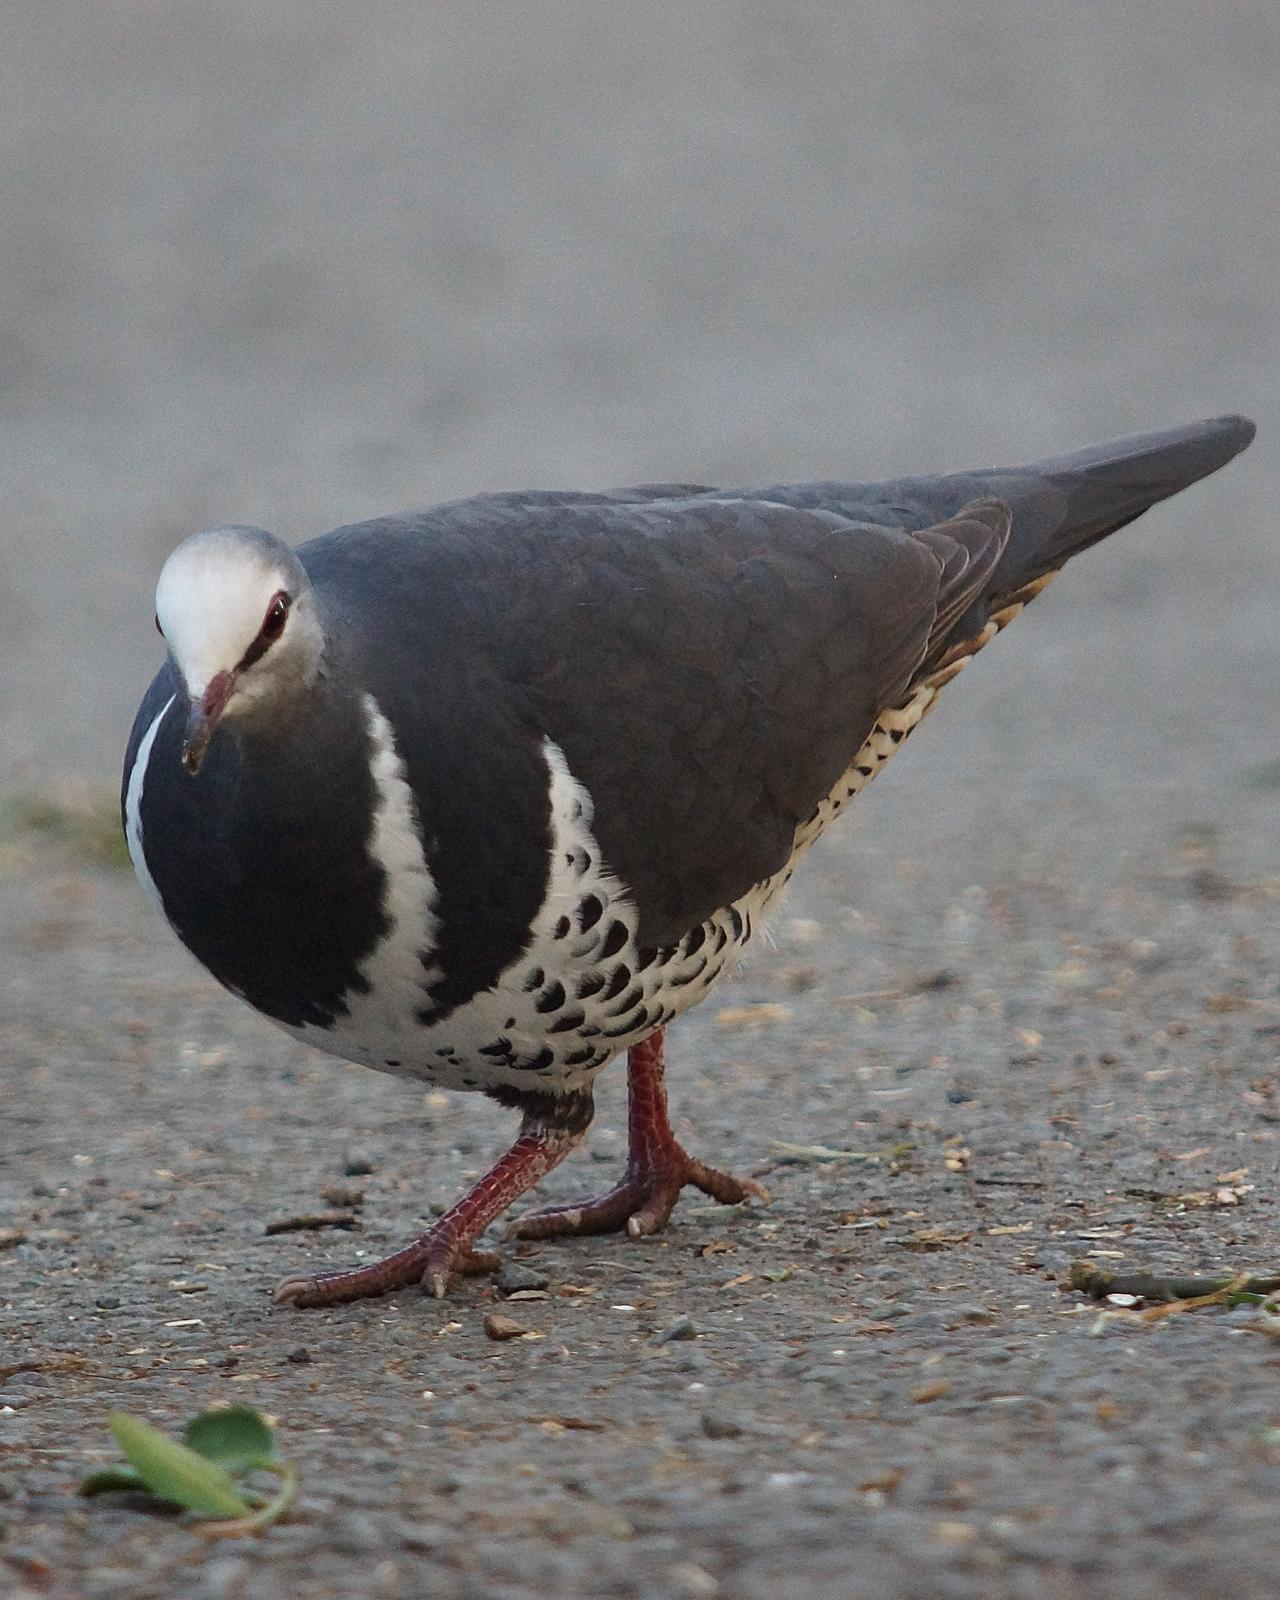 Wonga Pigeon Photo by Steve Percival